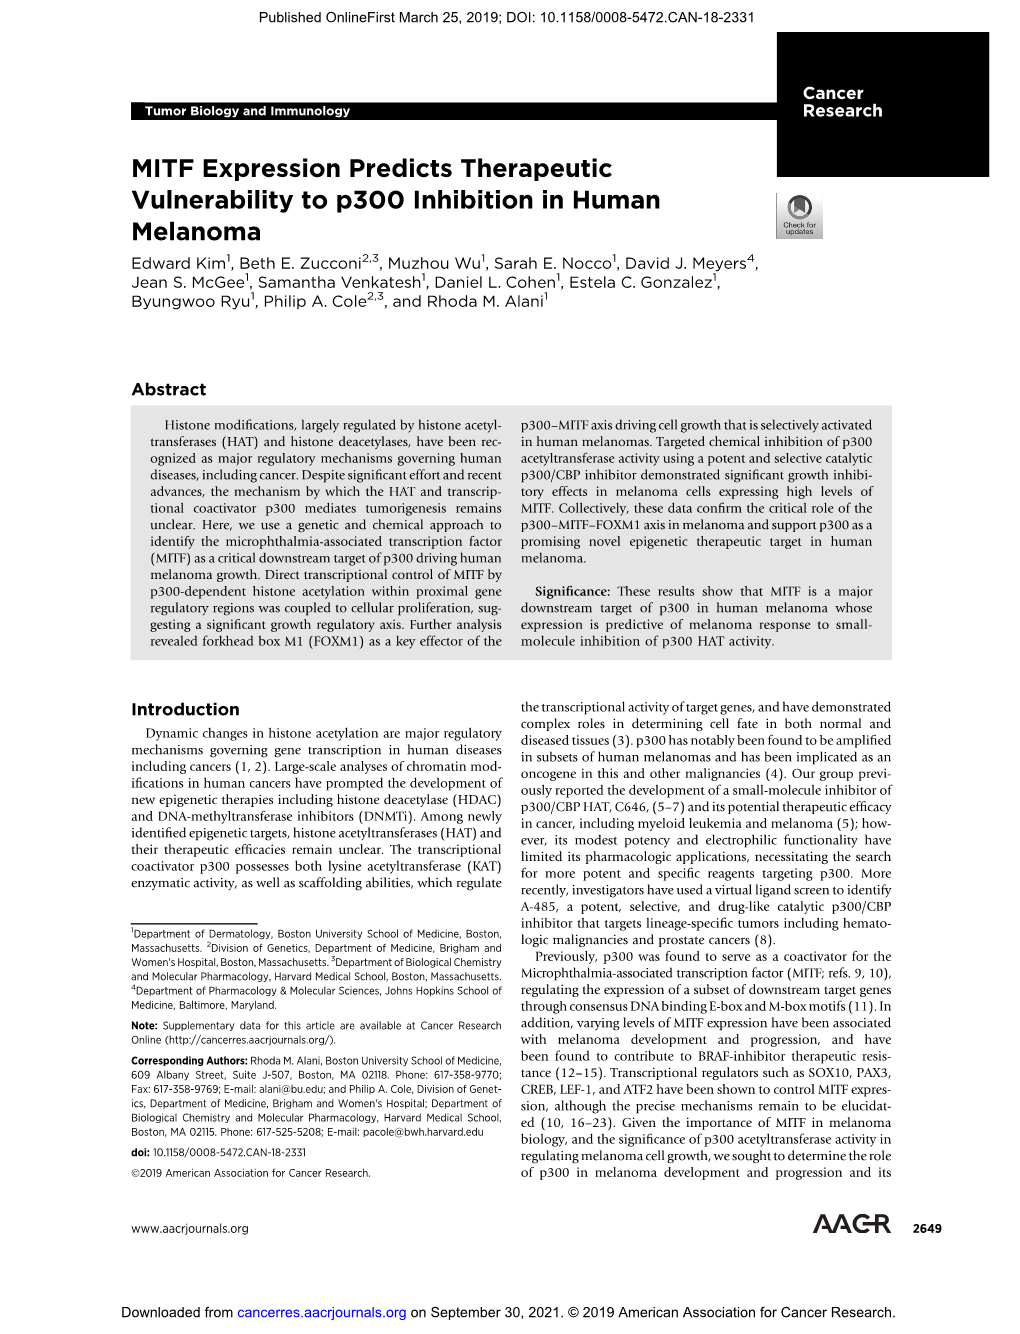 MITF Expression Predicts Therapeutic Vulnerability to P300 Inhibition in Human Melanoma Edward Kim1, Beth E